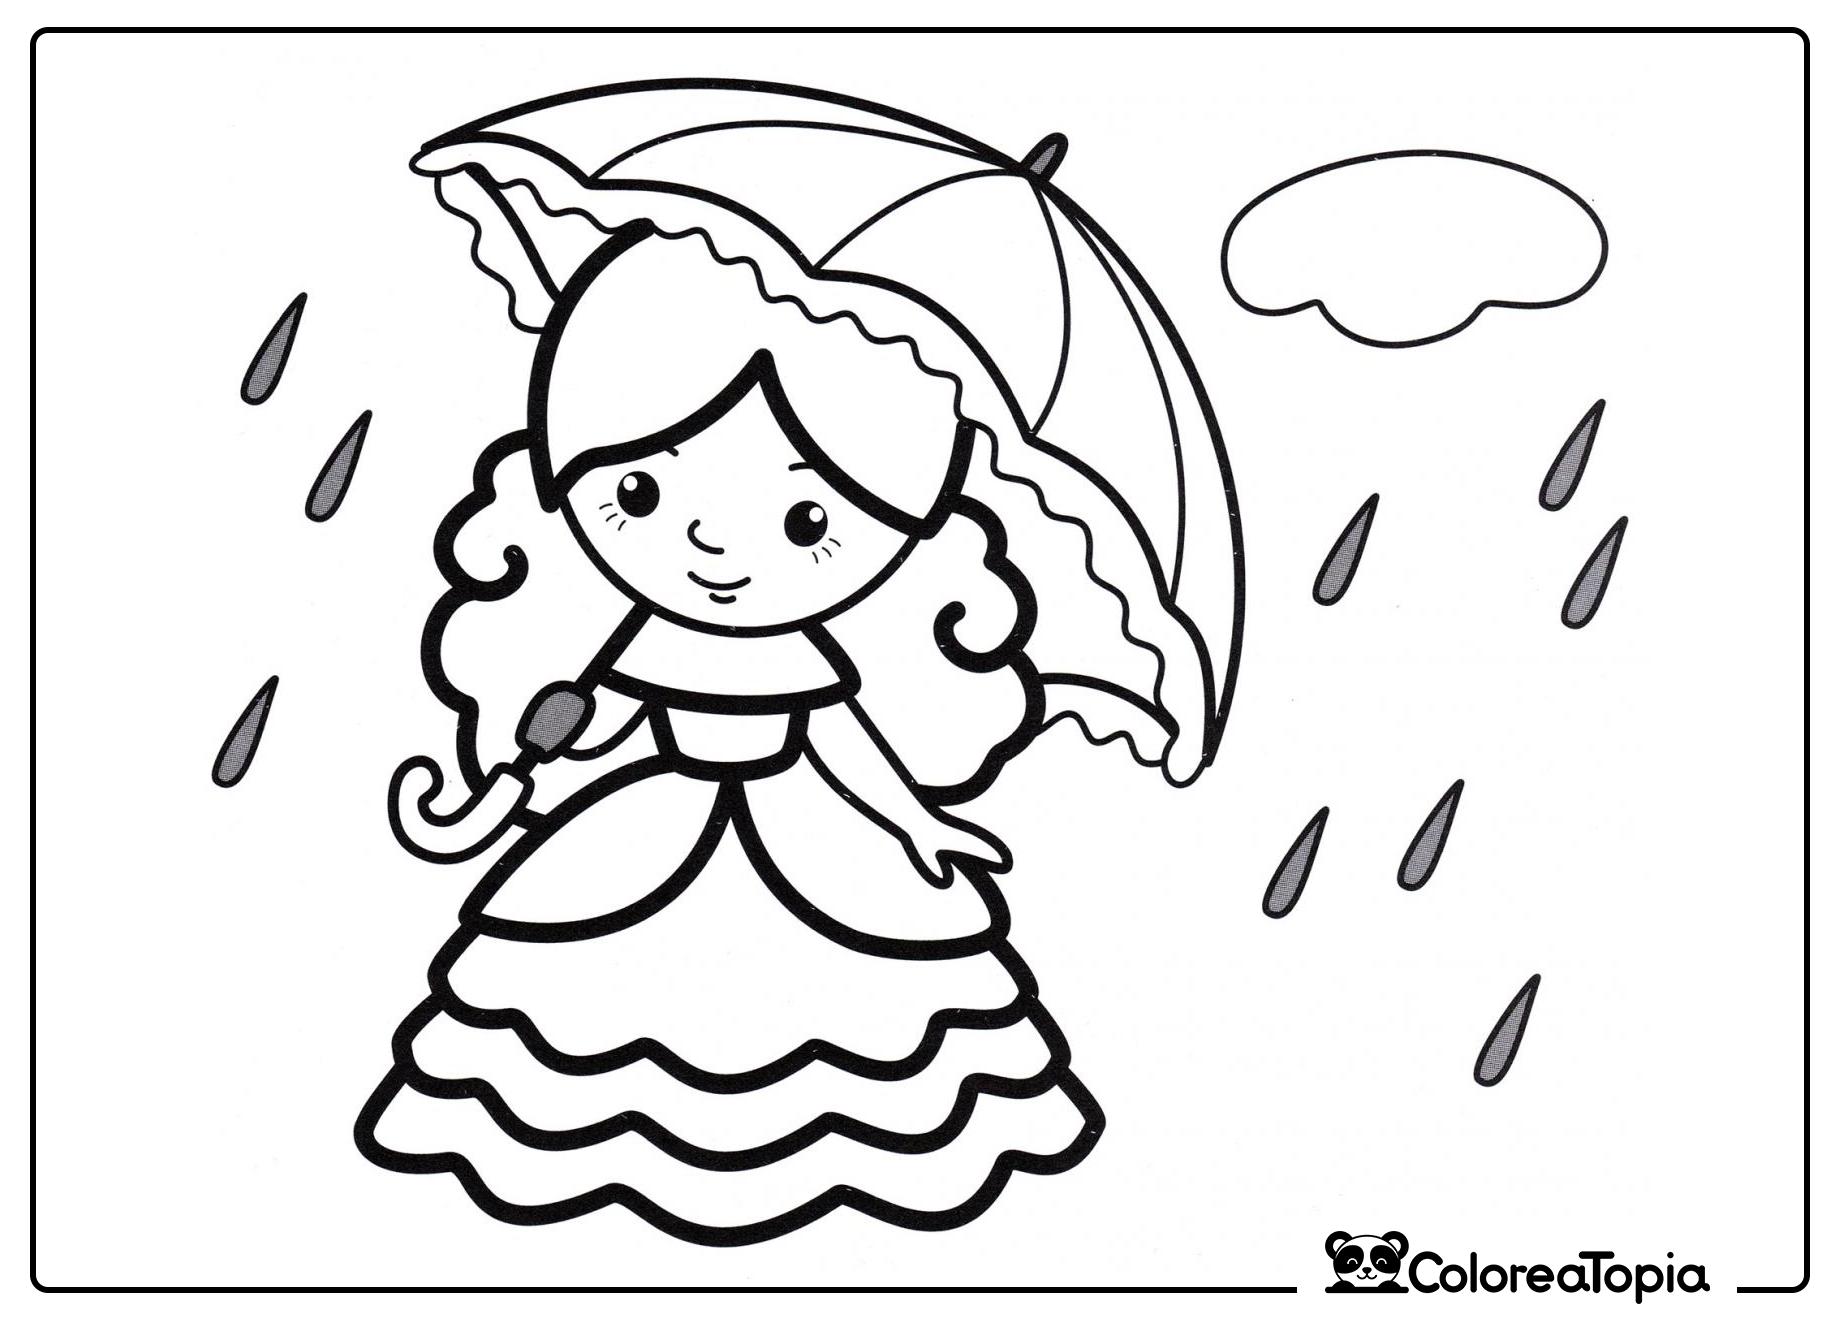 Princesa bajo la lluvia - dibujo para colorear